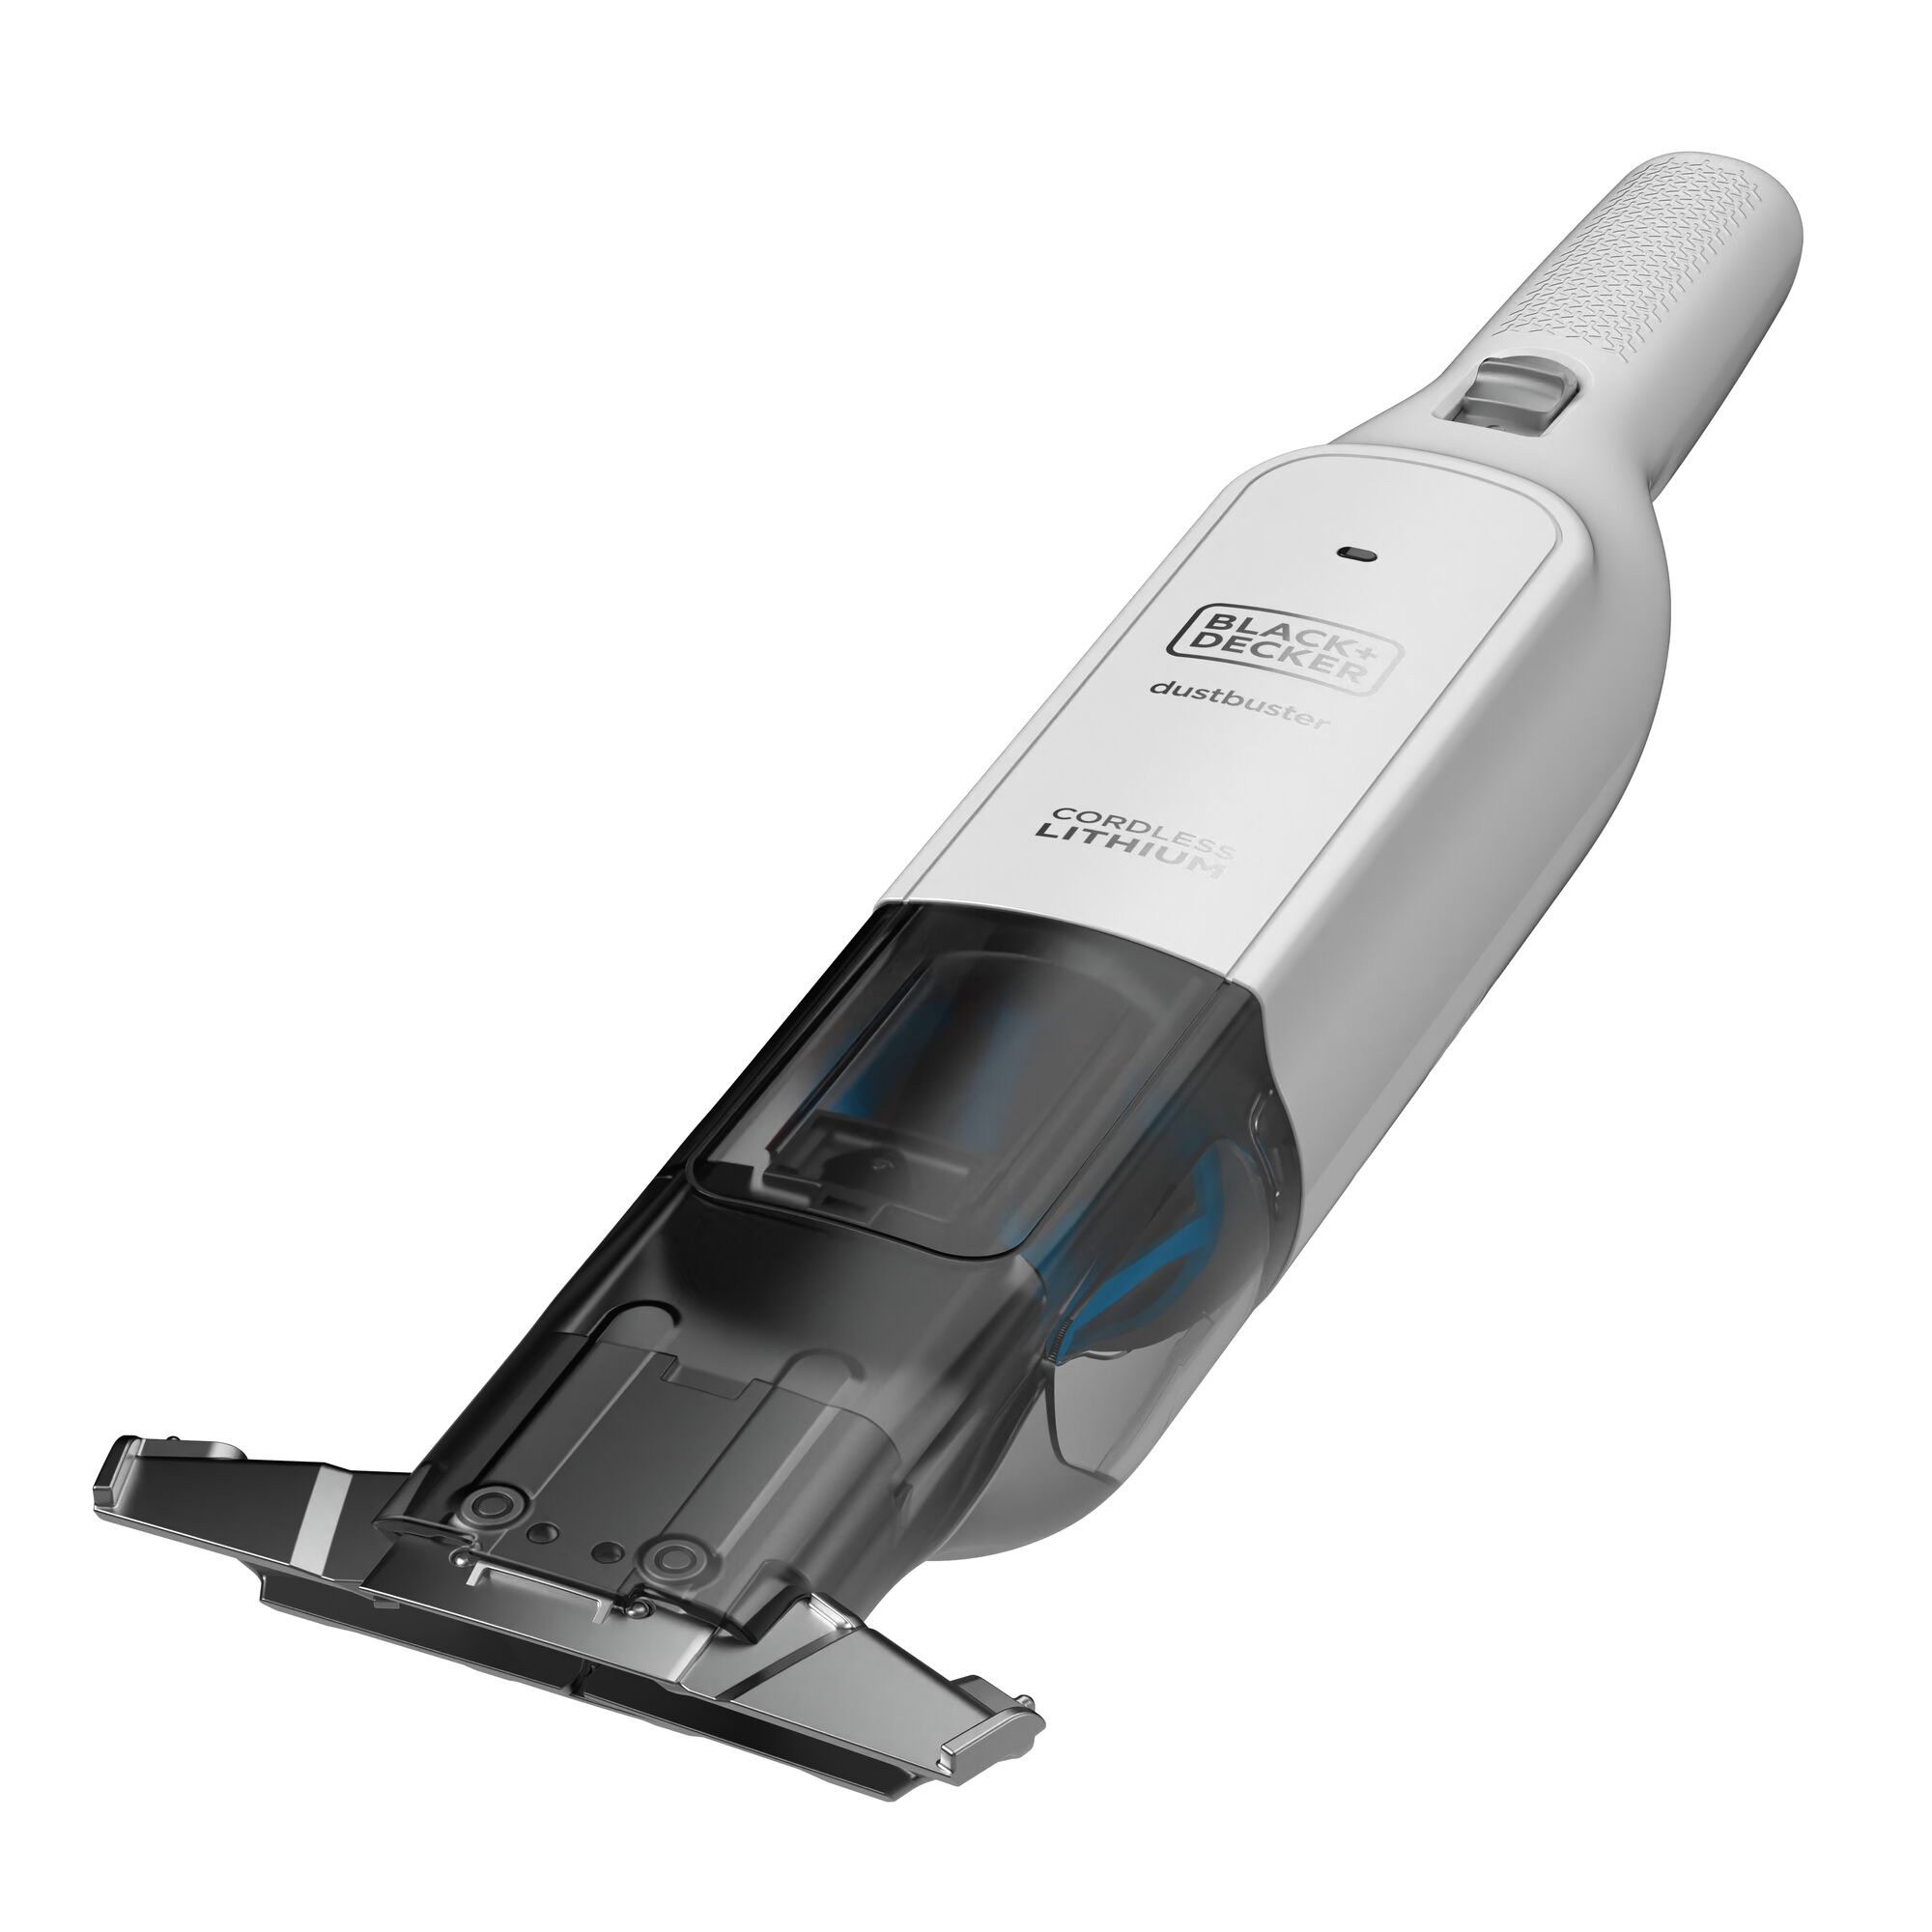 Profile of dustbuster 12 volt MAX AdvancedClean cordless hand vacuum.